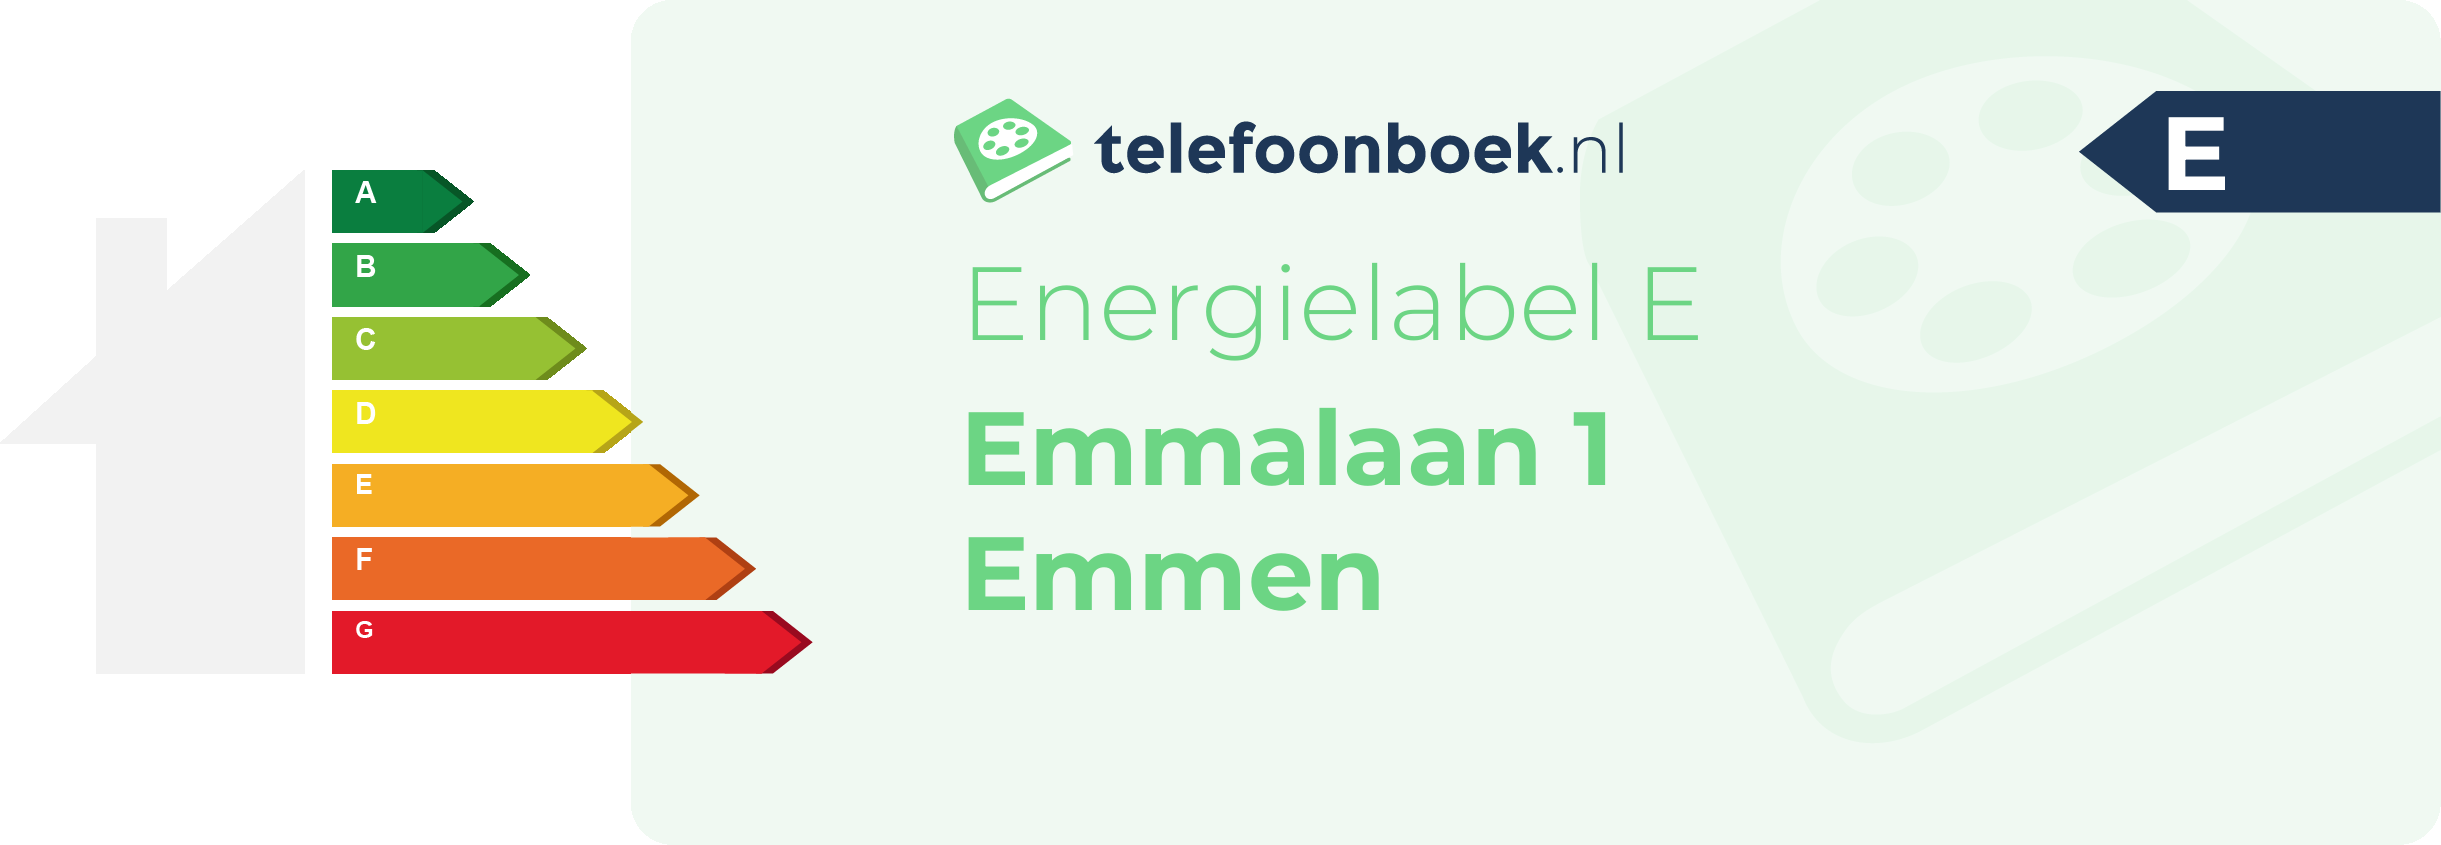 Energielabel Emmalaan 1 Emmen